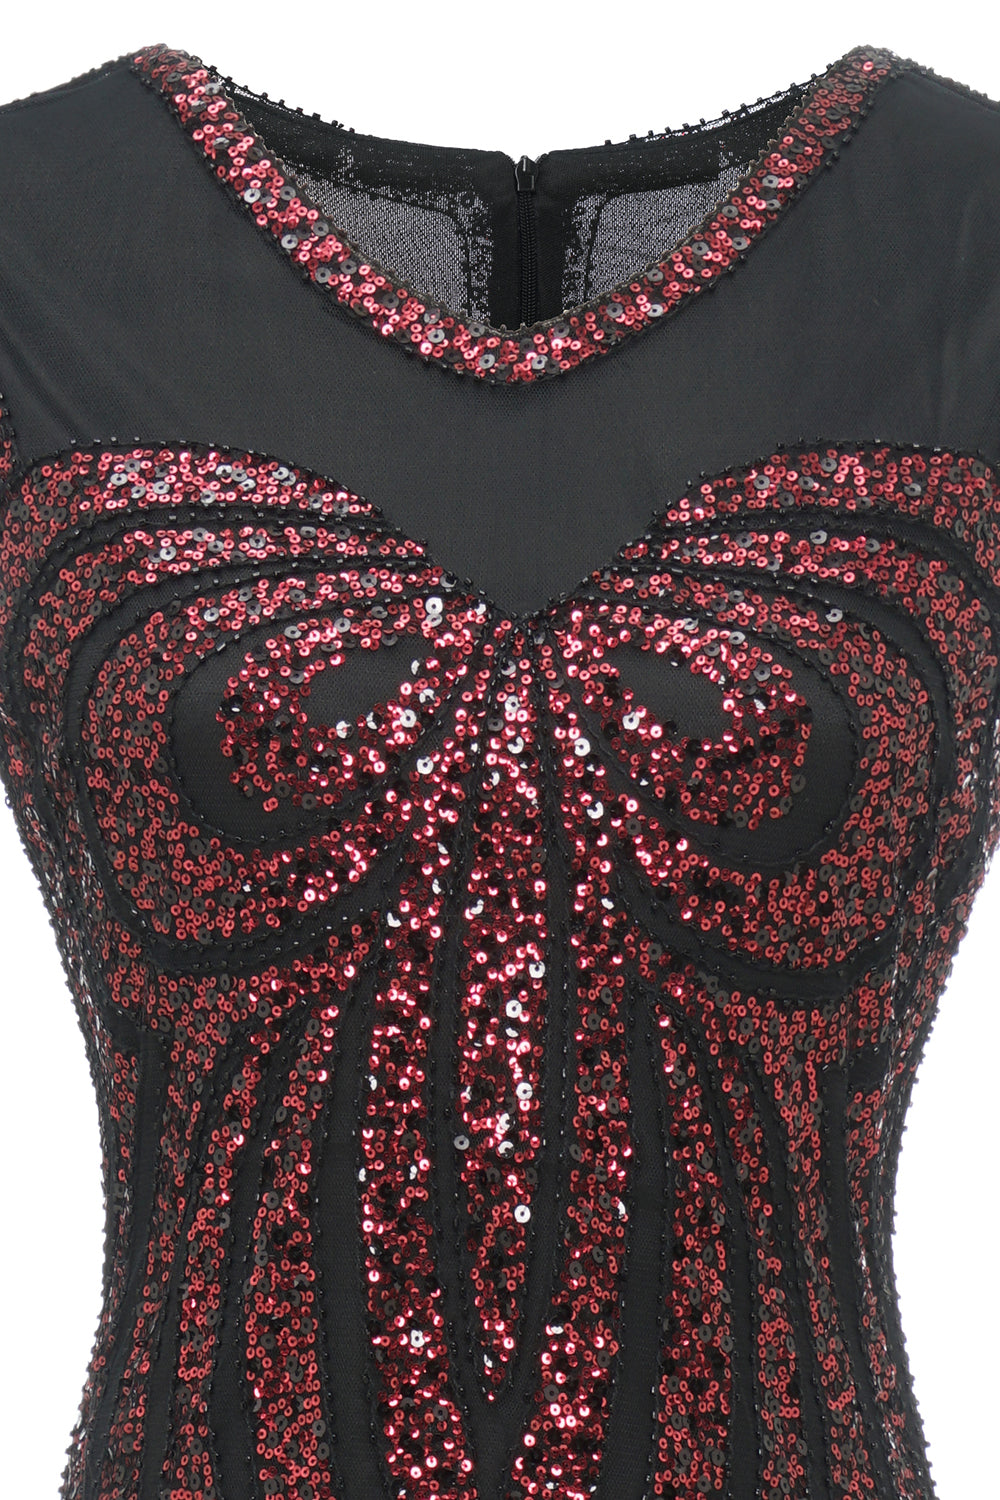 Black Red Sequins Long 1920s Dress